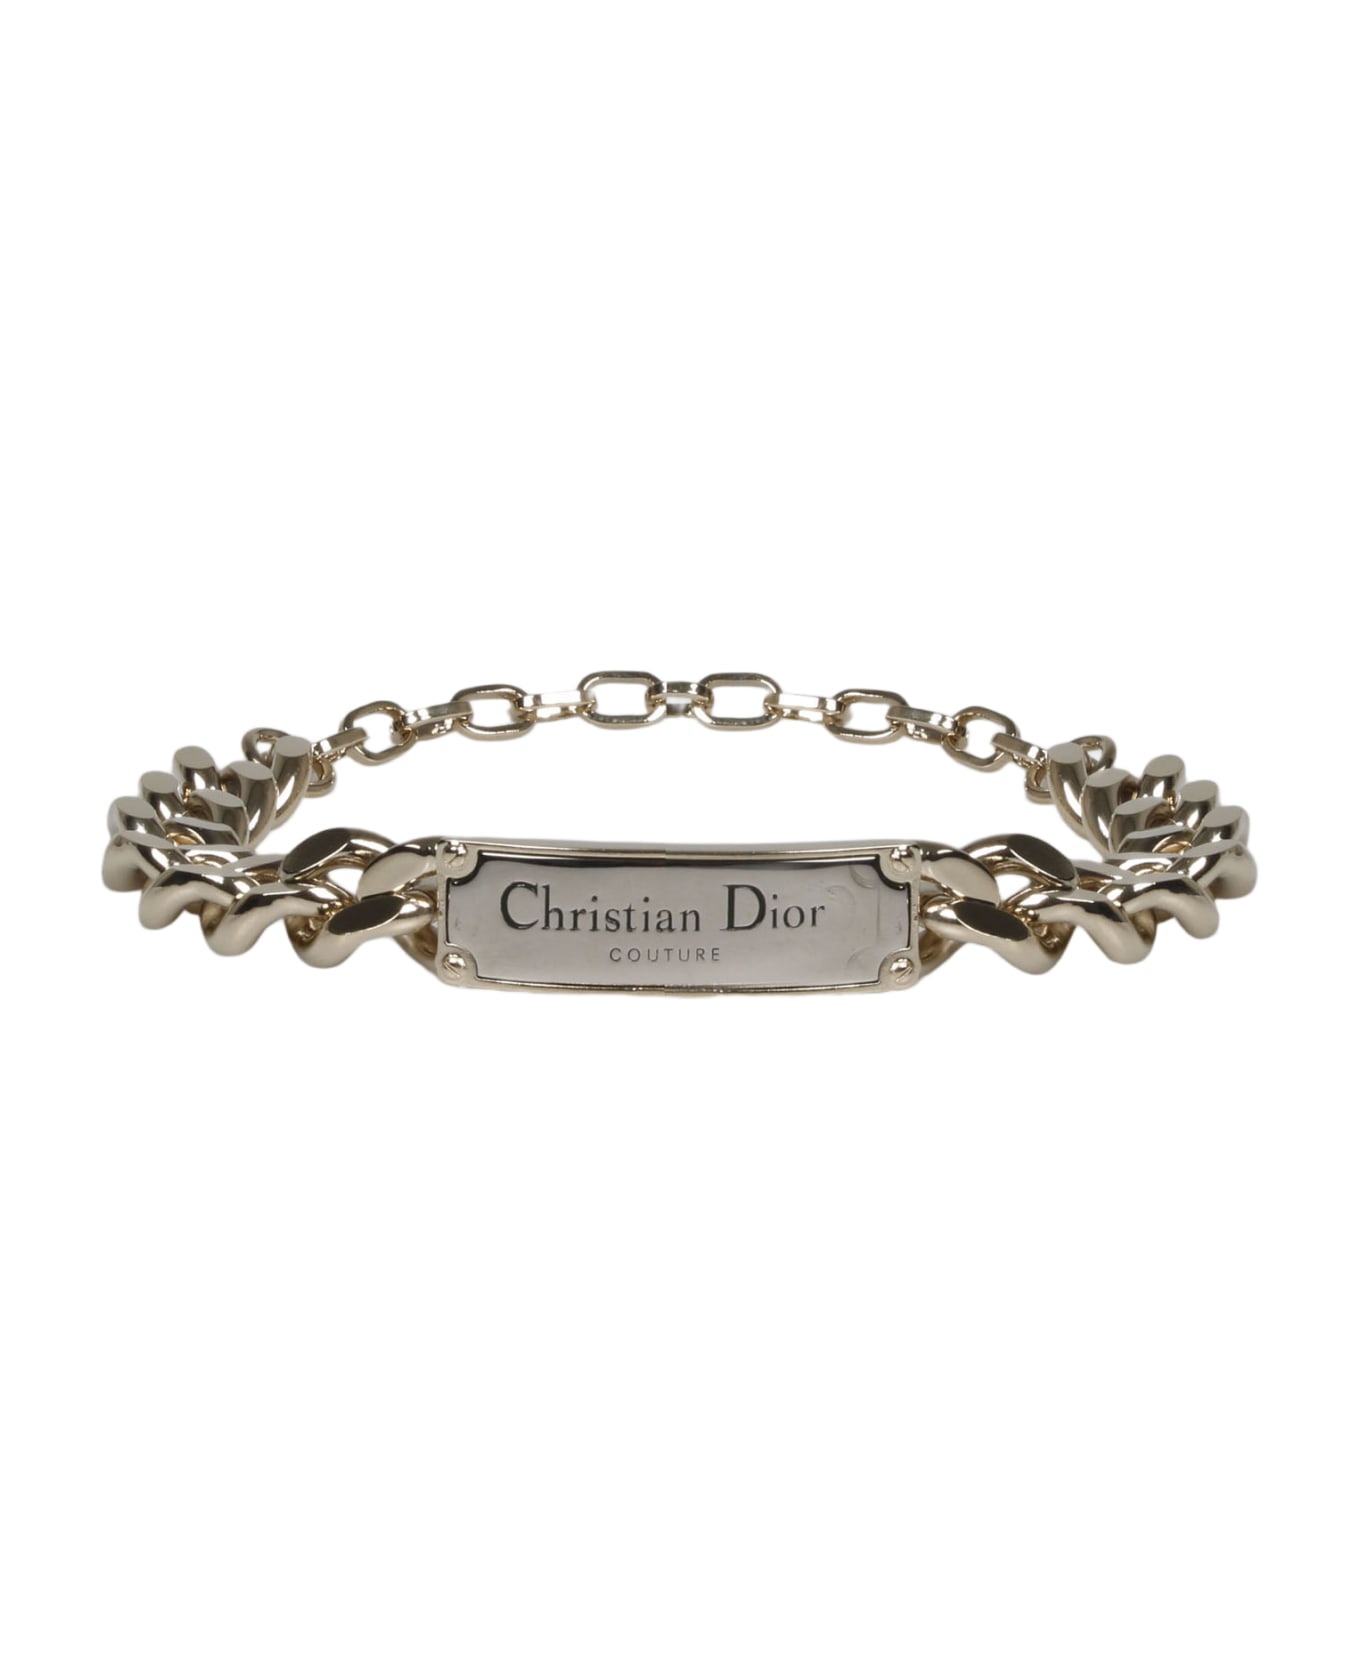 Dior Christian Couture Chain Link Bracelet - Metallic